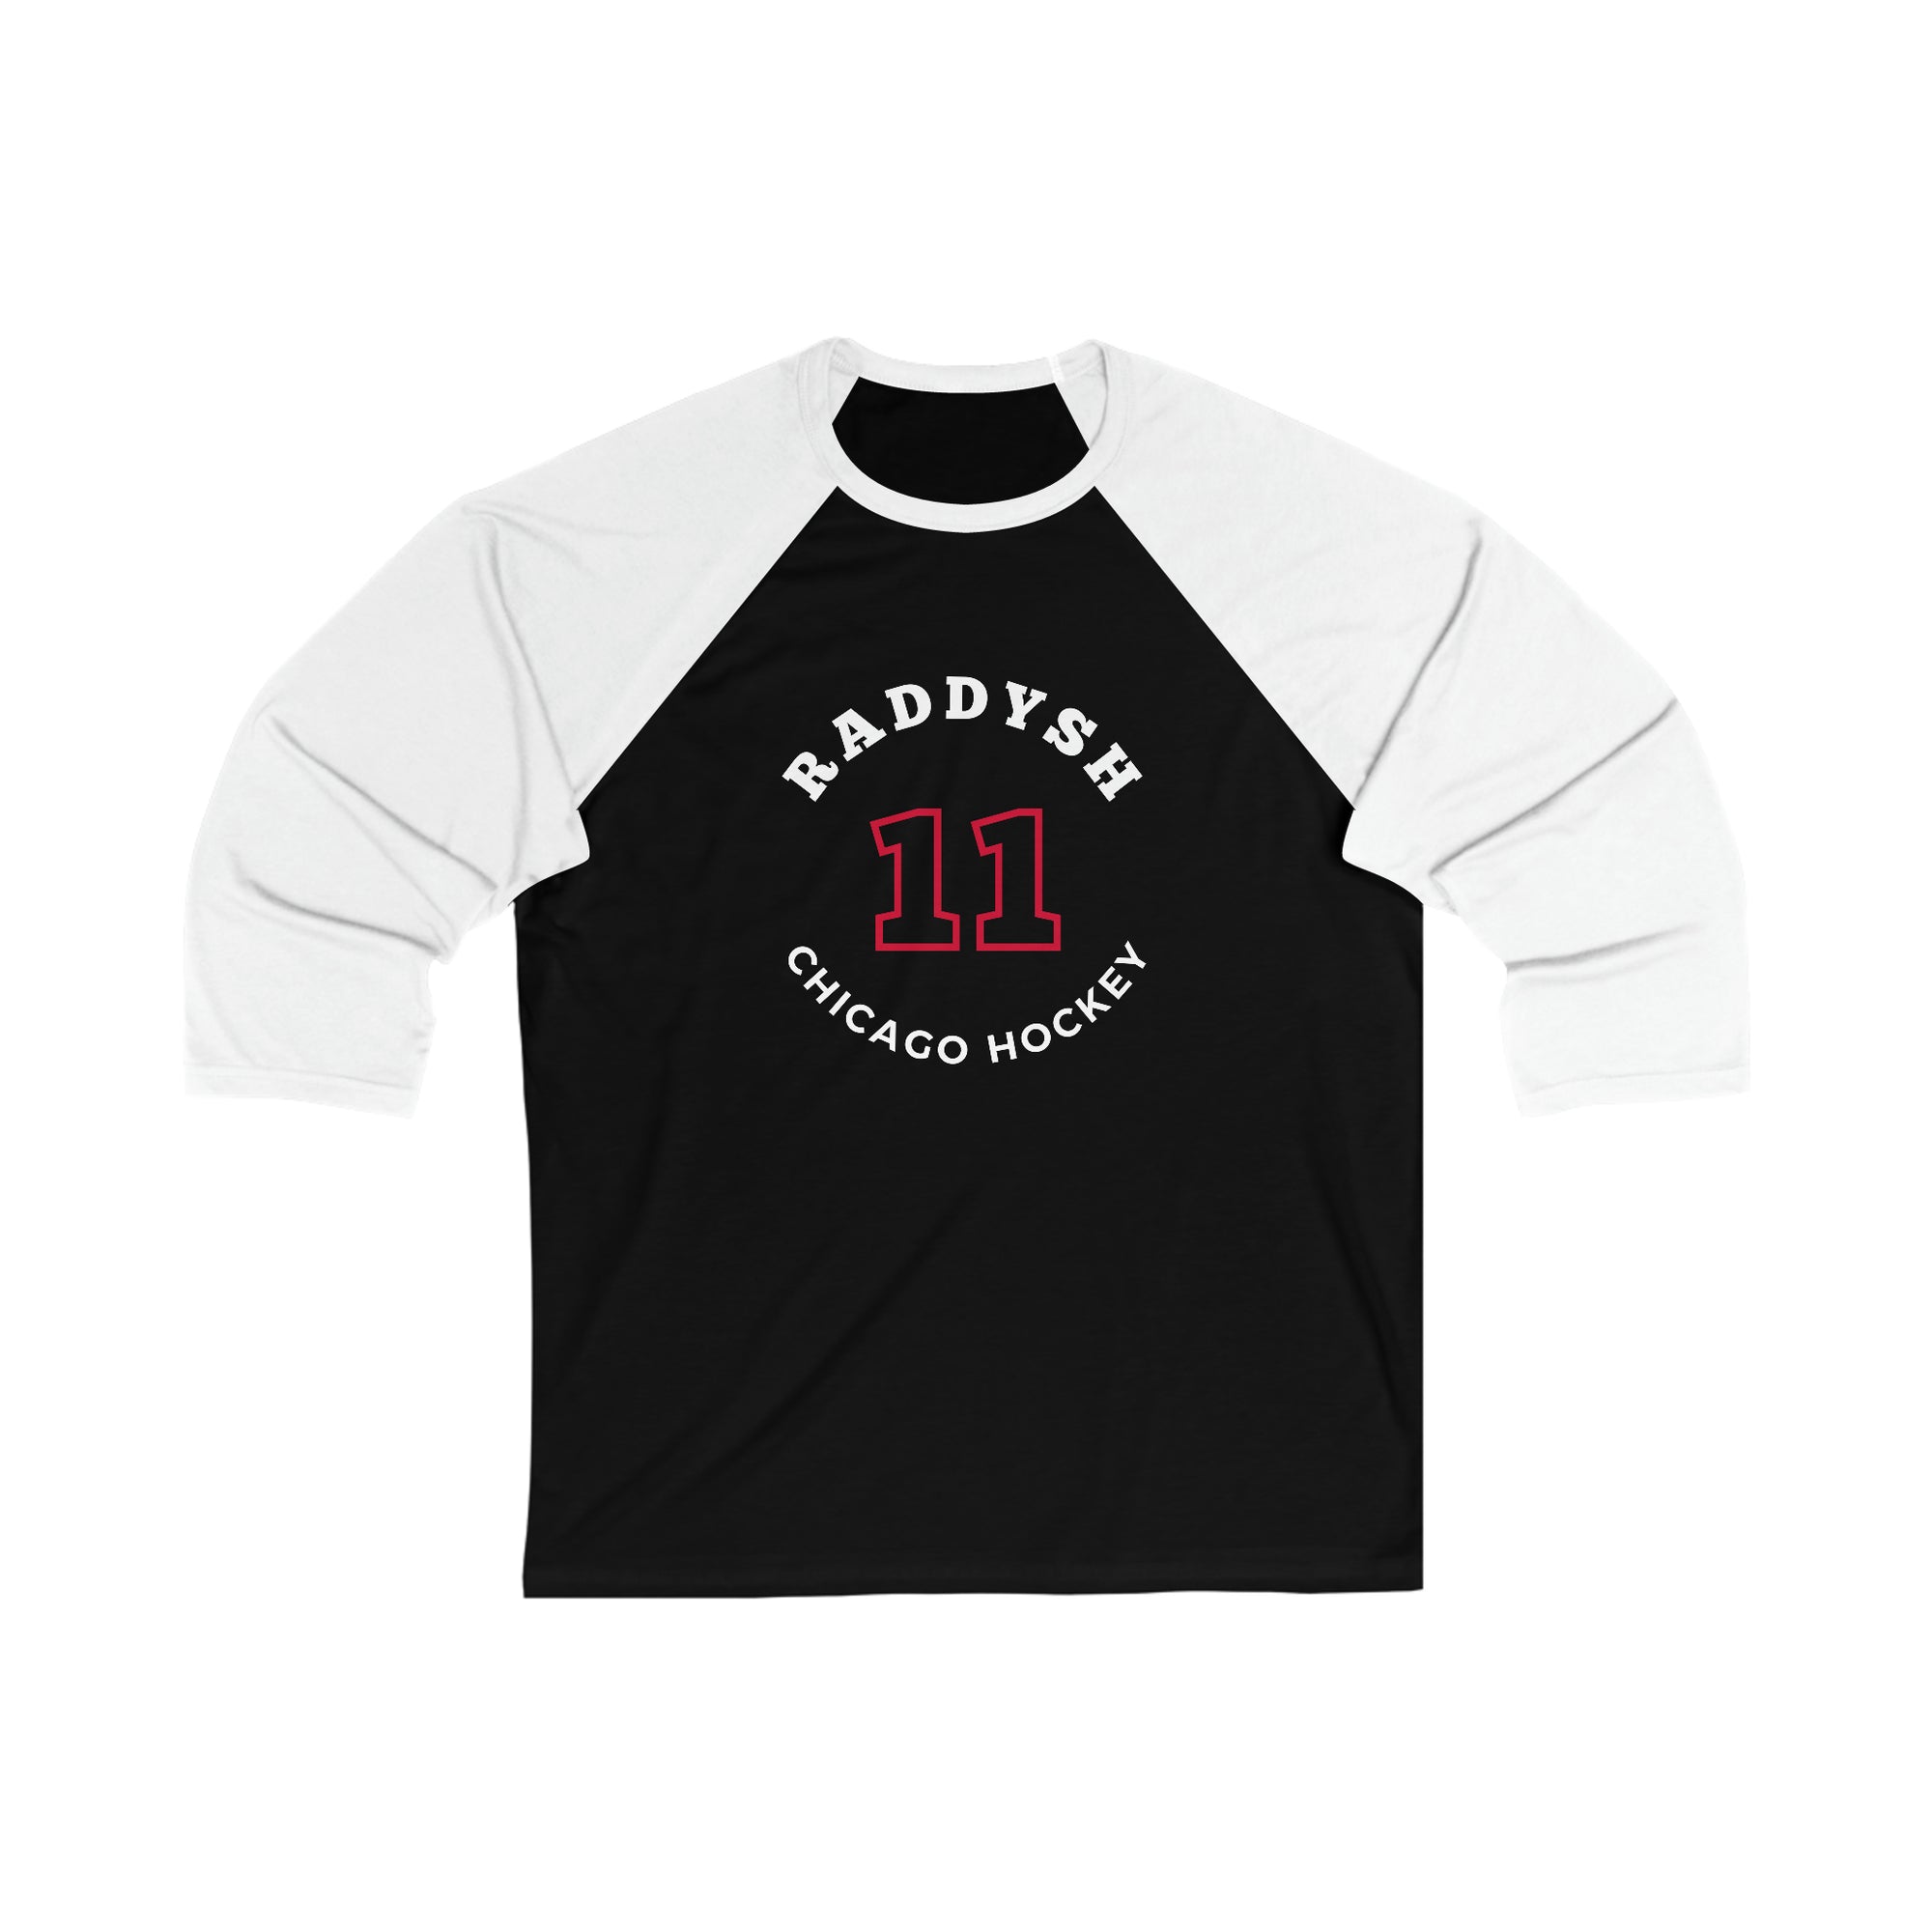 Raddysh 11 Chicago Hockey Number Arch Design Unisex Tri-Blend 3/4 Sleeve Raglan Baseball Shirt